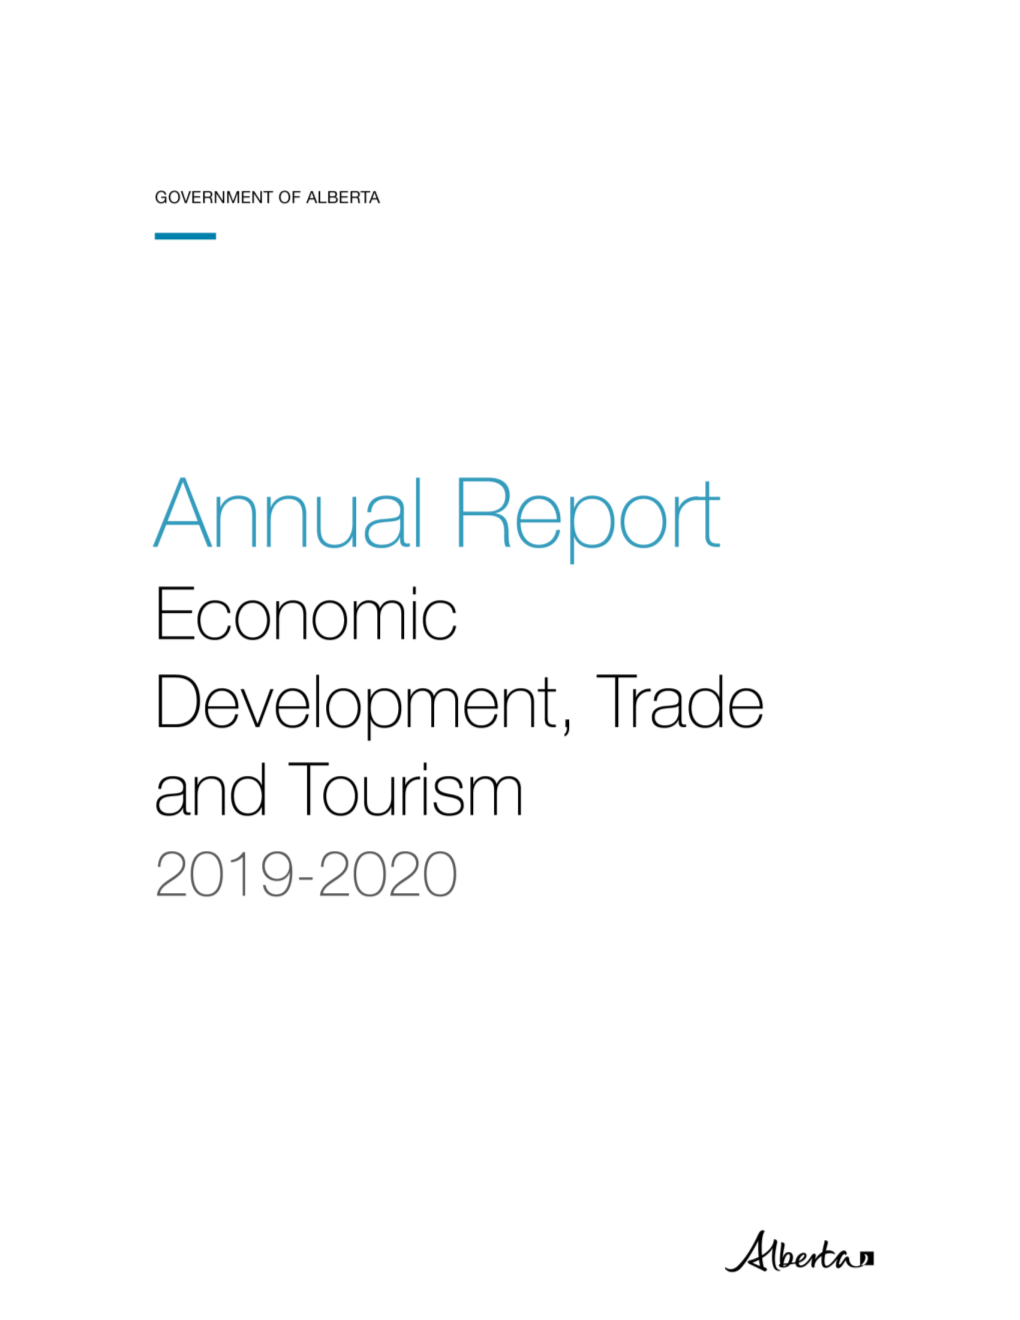 Economic Development, Trade and Tourism Annual Report 2019-2020